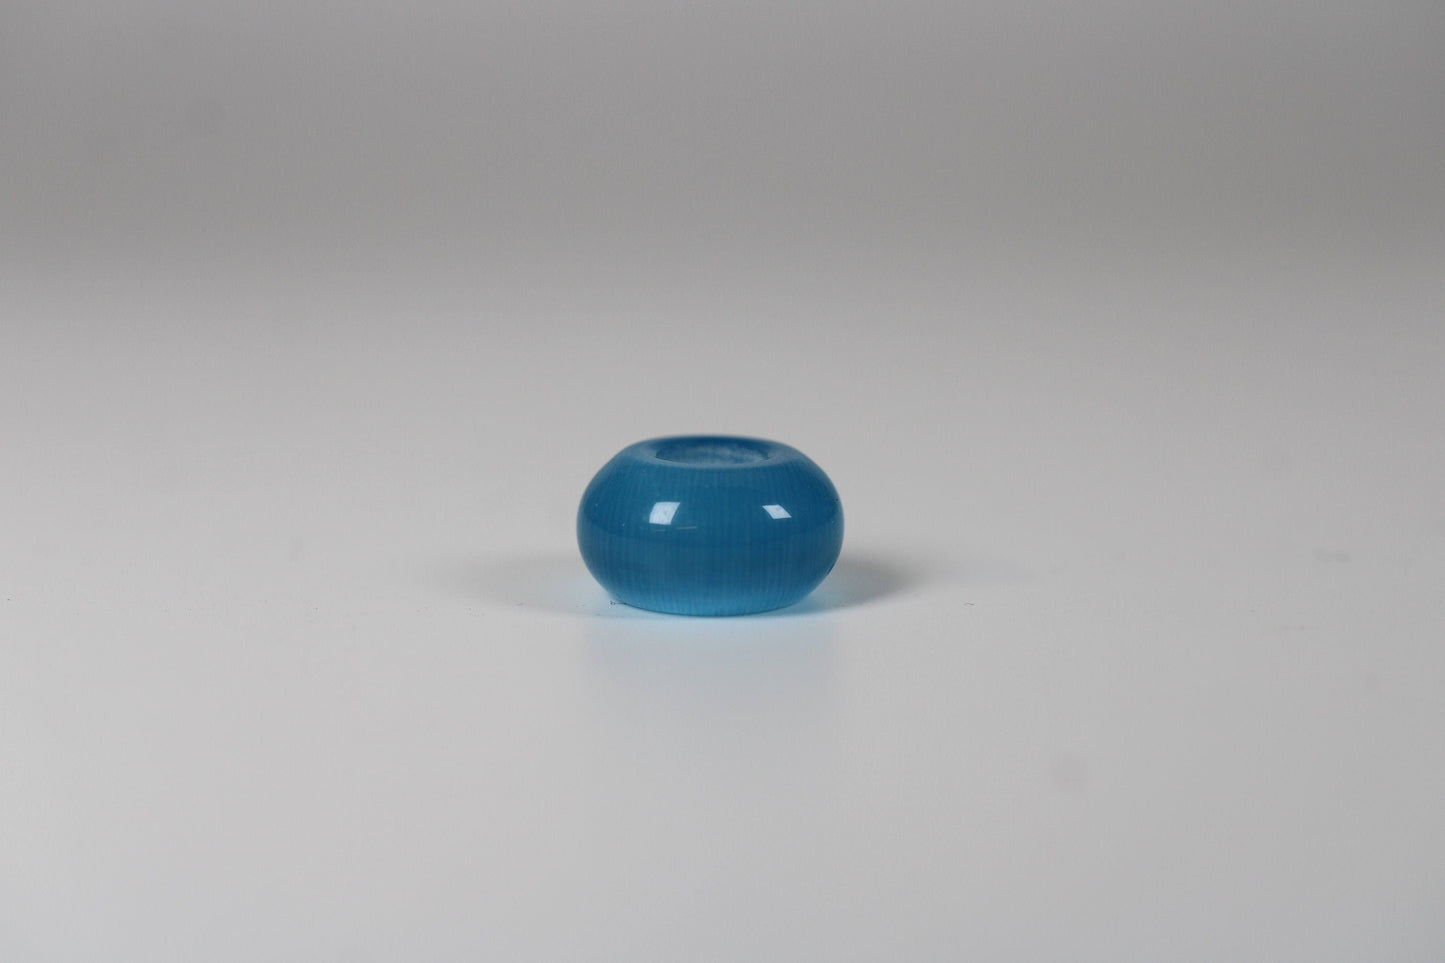 2 Blue Glass Cats Eye Dread Beads -  6mm Bead Hole - DreadLock Beads, Dread Beads and Accessories, Hair Beads, Dread Jewelry